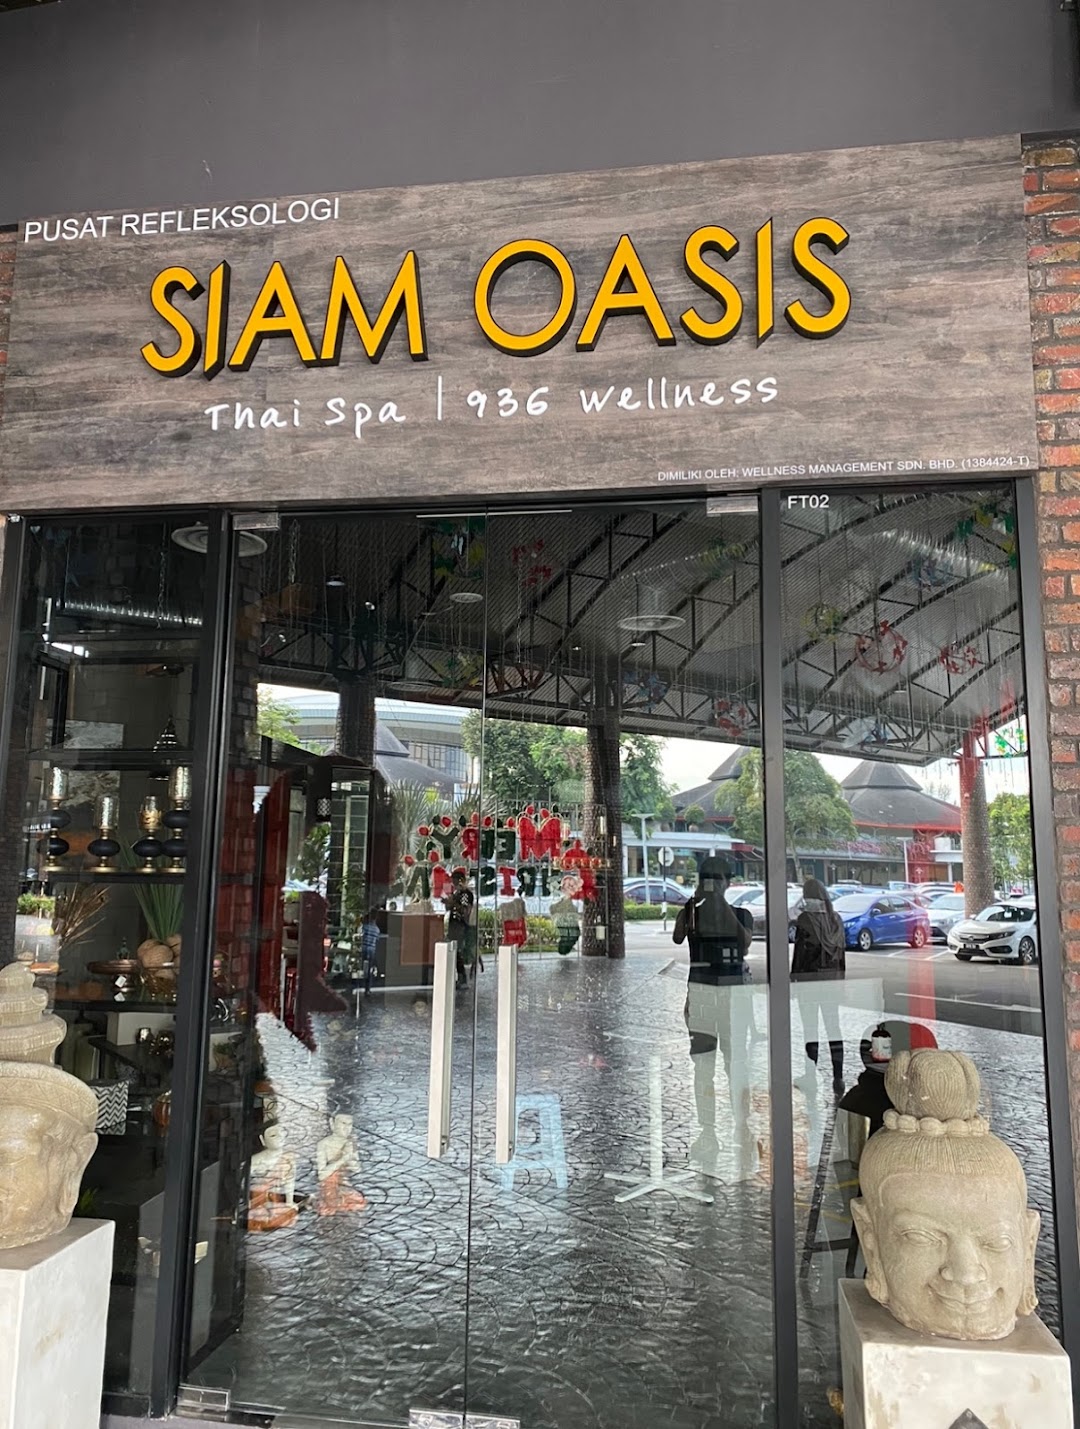 Siam oasis